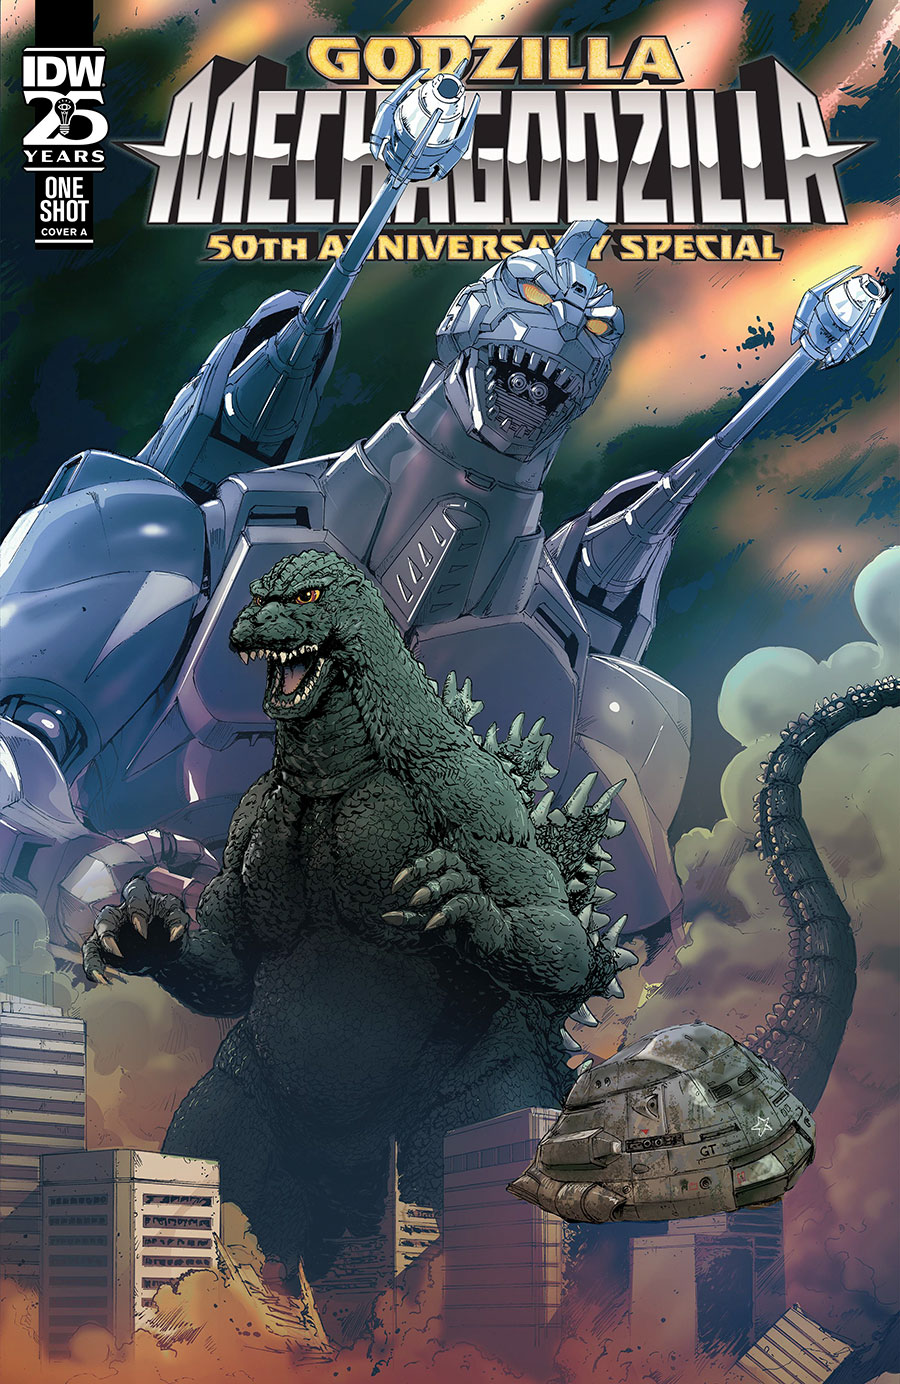 Godzilla Mechagodzilla 50th Anniversary Special #1 (One Shot) Cover A Regular Andrew Griffith Cover